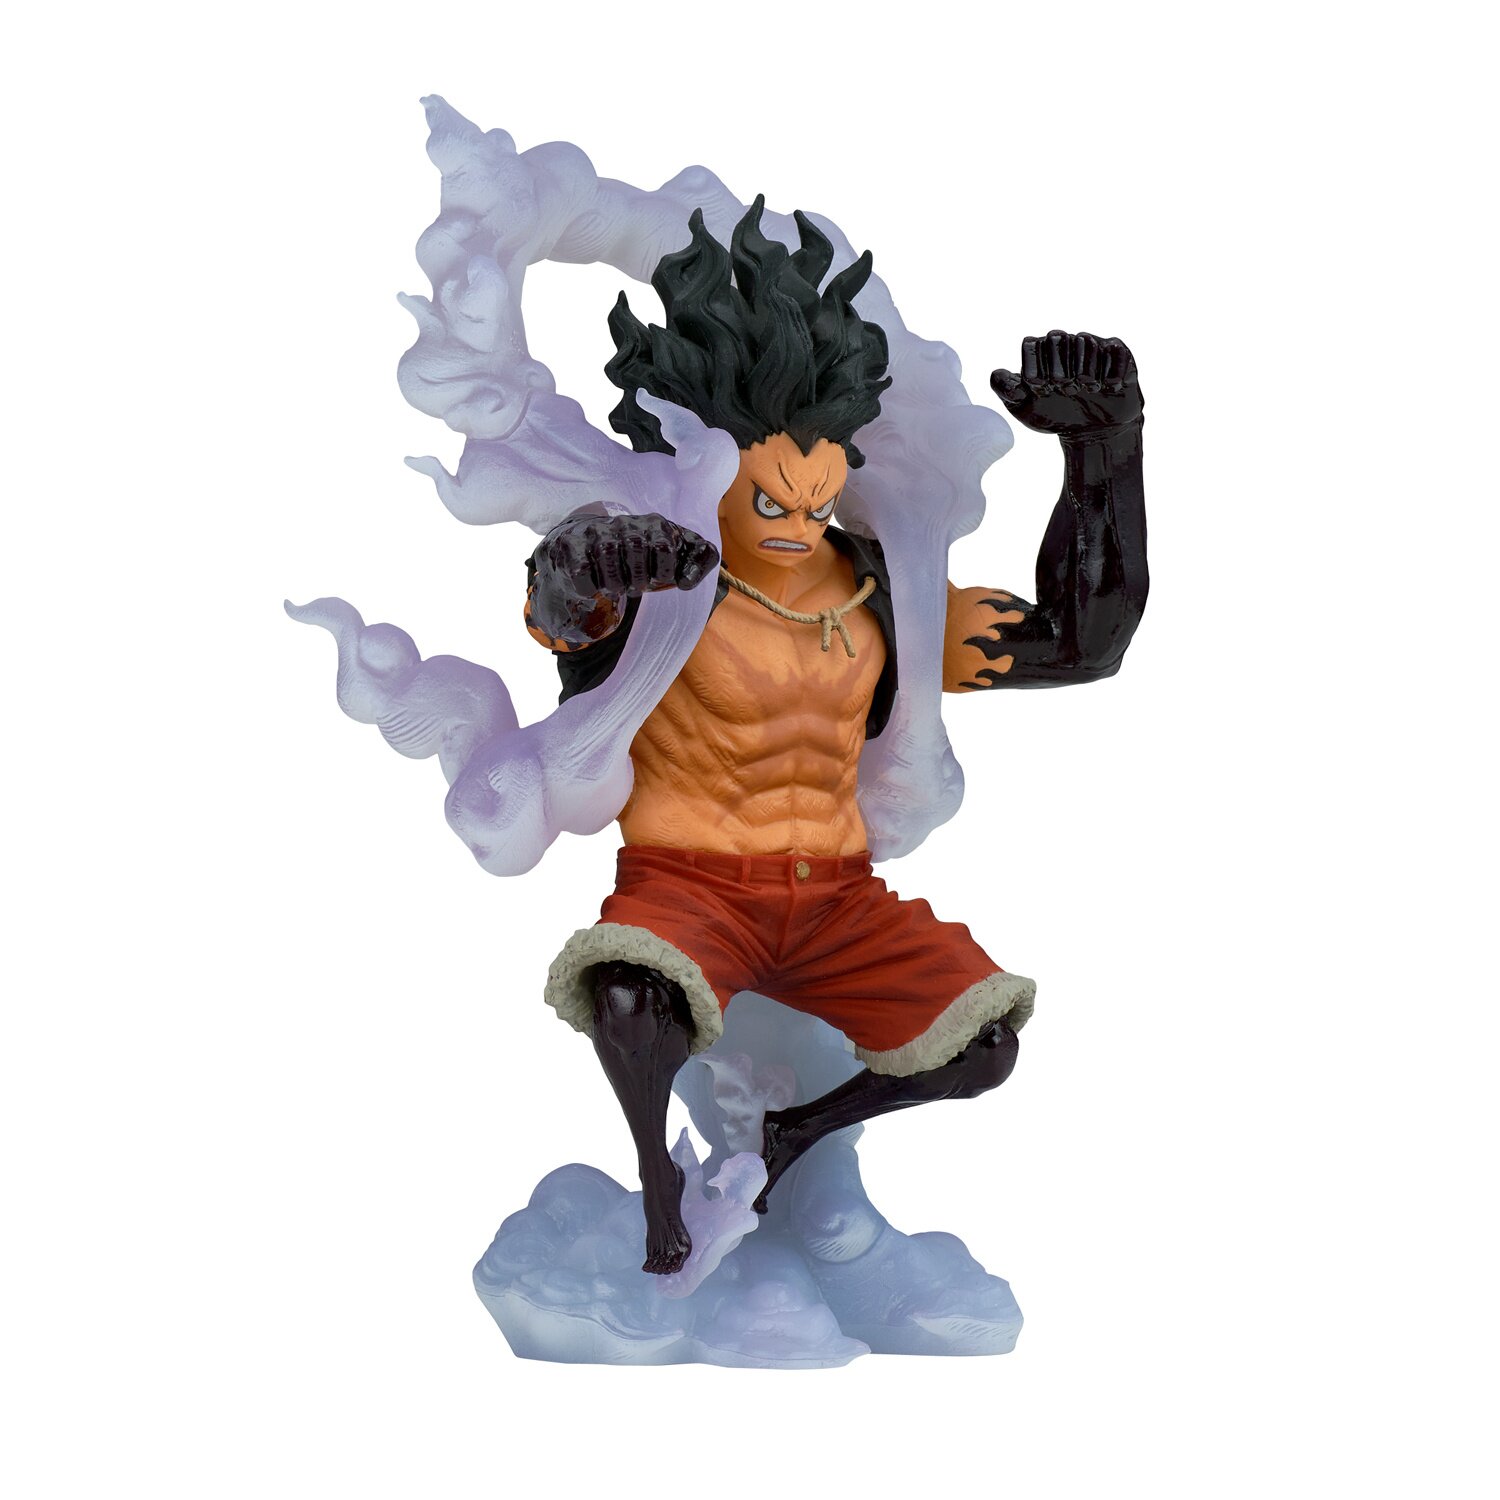 Roronoa Zoro (One Piece) Dioramatic Ver B. The Anime Statue